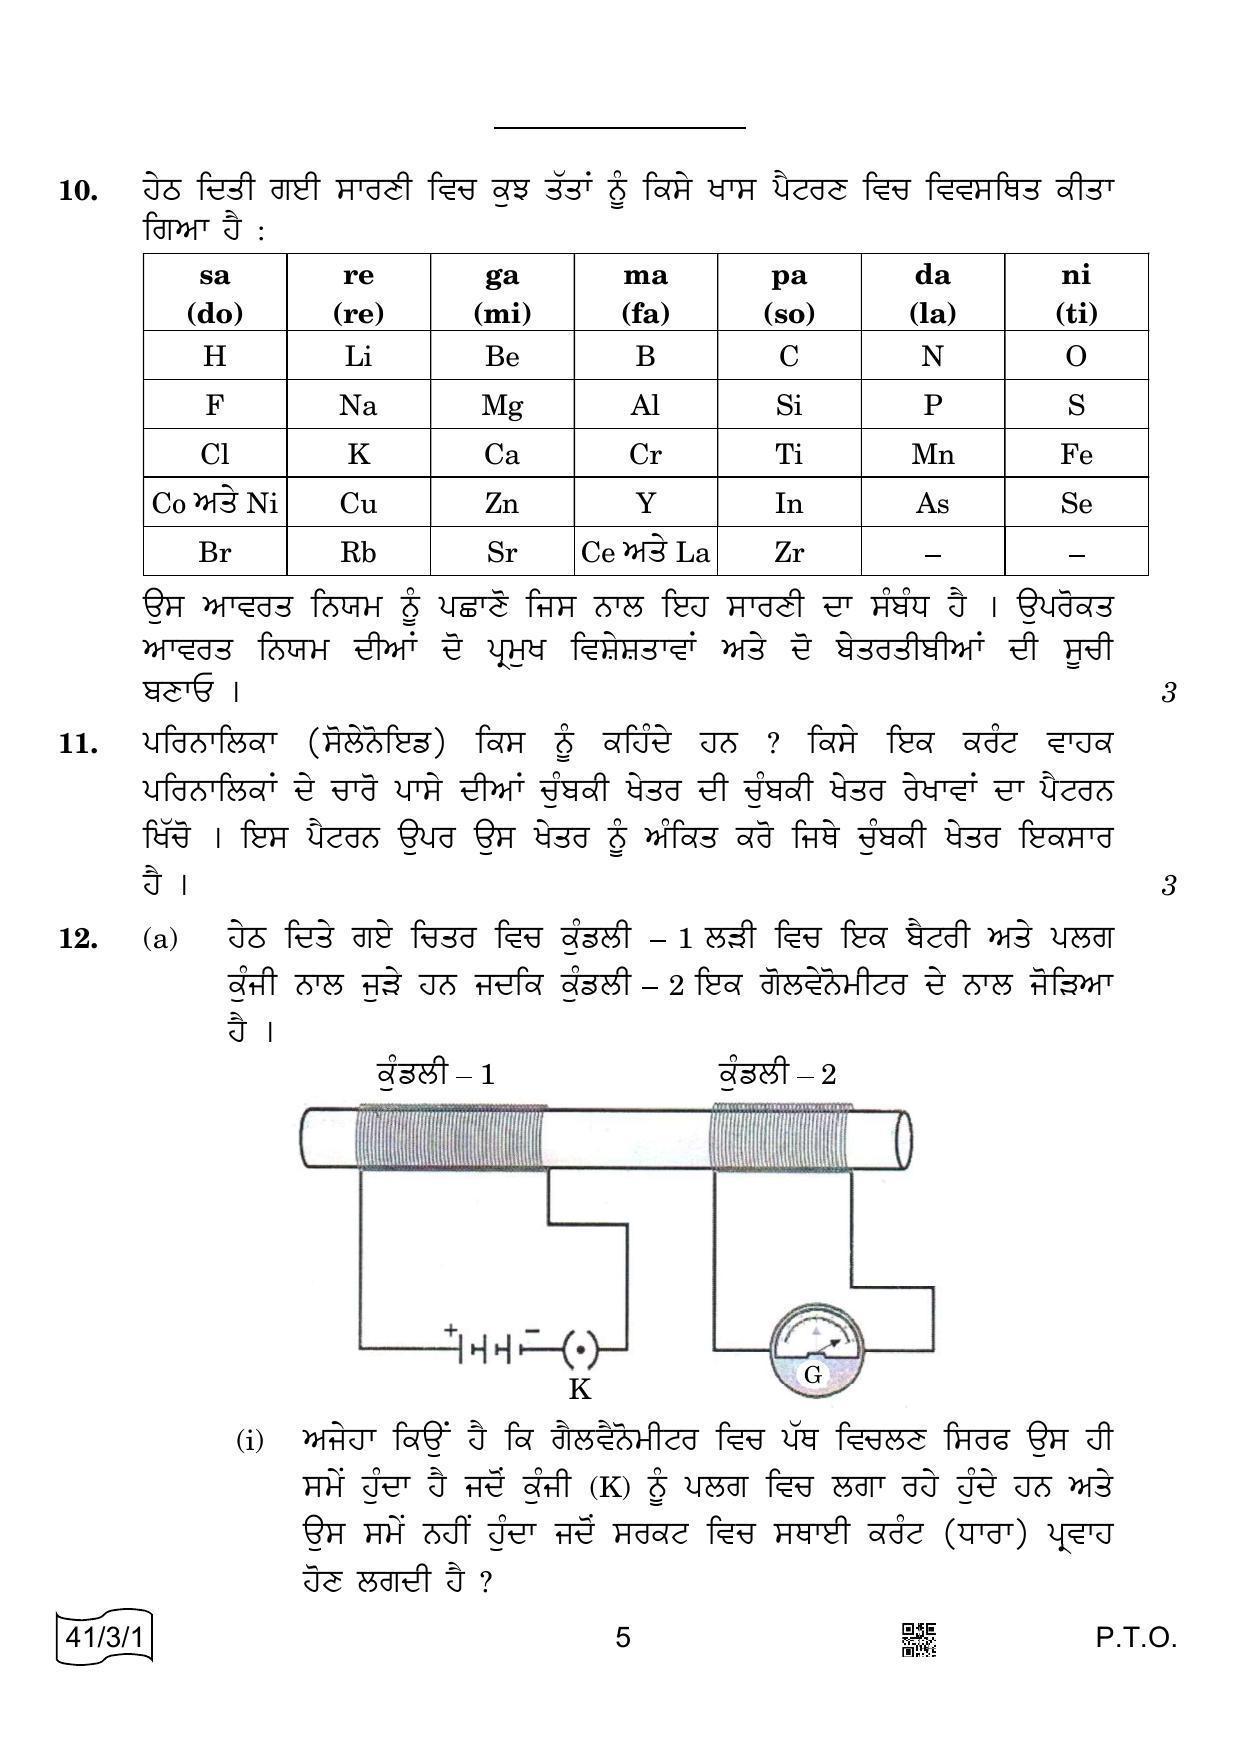 CBSE Class 10 41-3-1 Science Punjabi Version 2022 Question Paper - Page 5